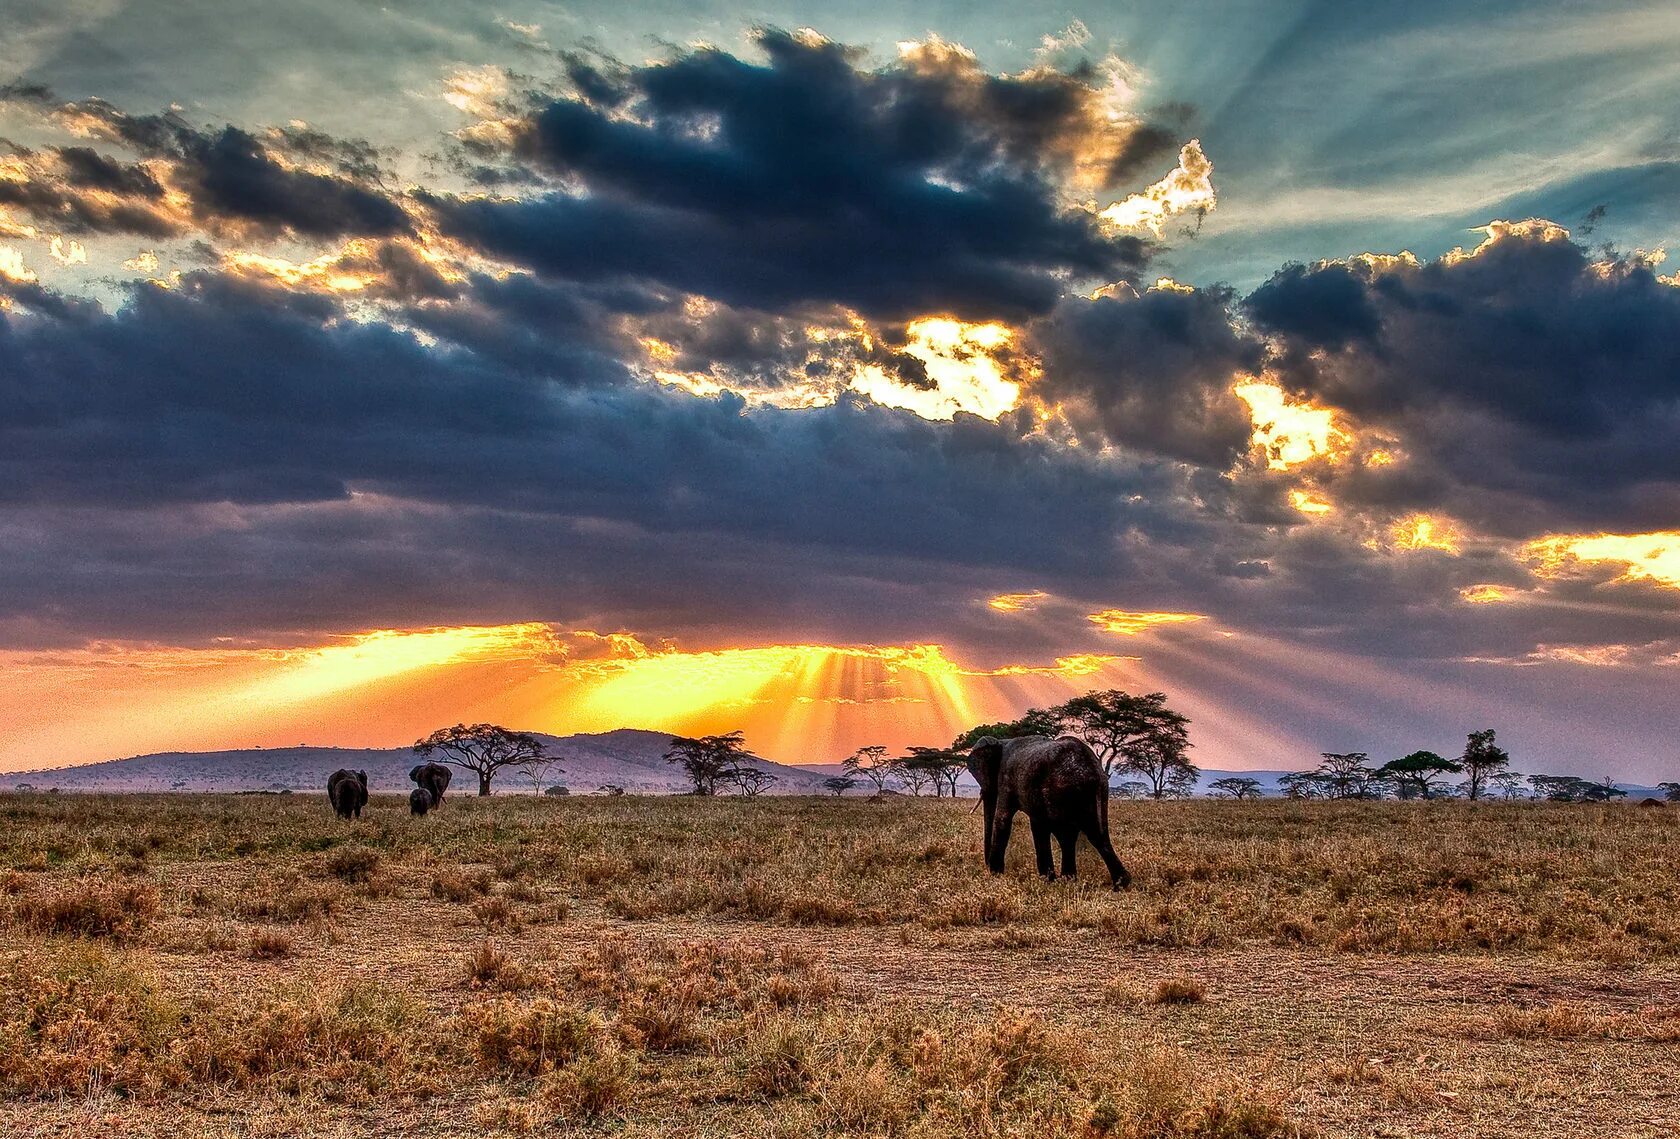 Красивая страна африки. Национальный парк Серенгети Танзания. Сафари в Танзании парк Серенгети. Национальный парк Серенгети, Танзания, Африка. Килиманджаро национальный парк Серенгети.